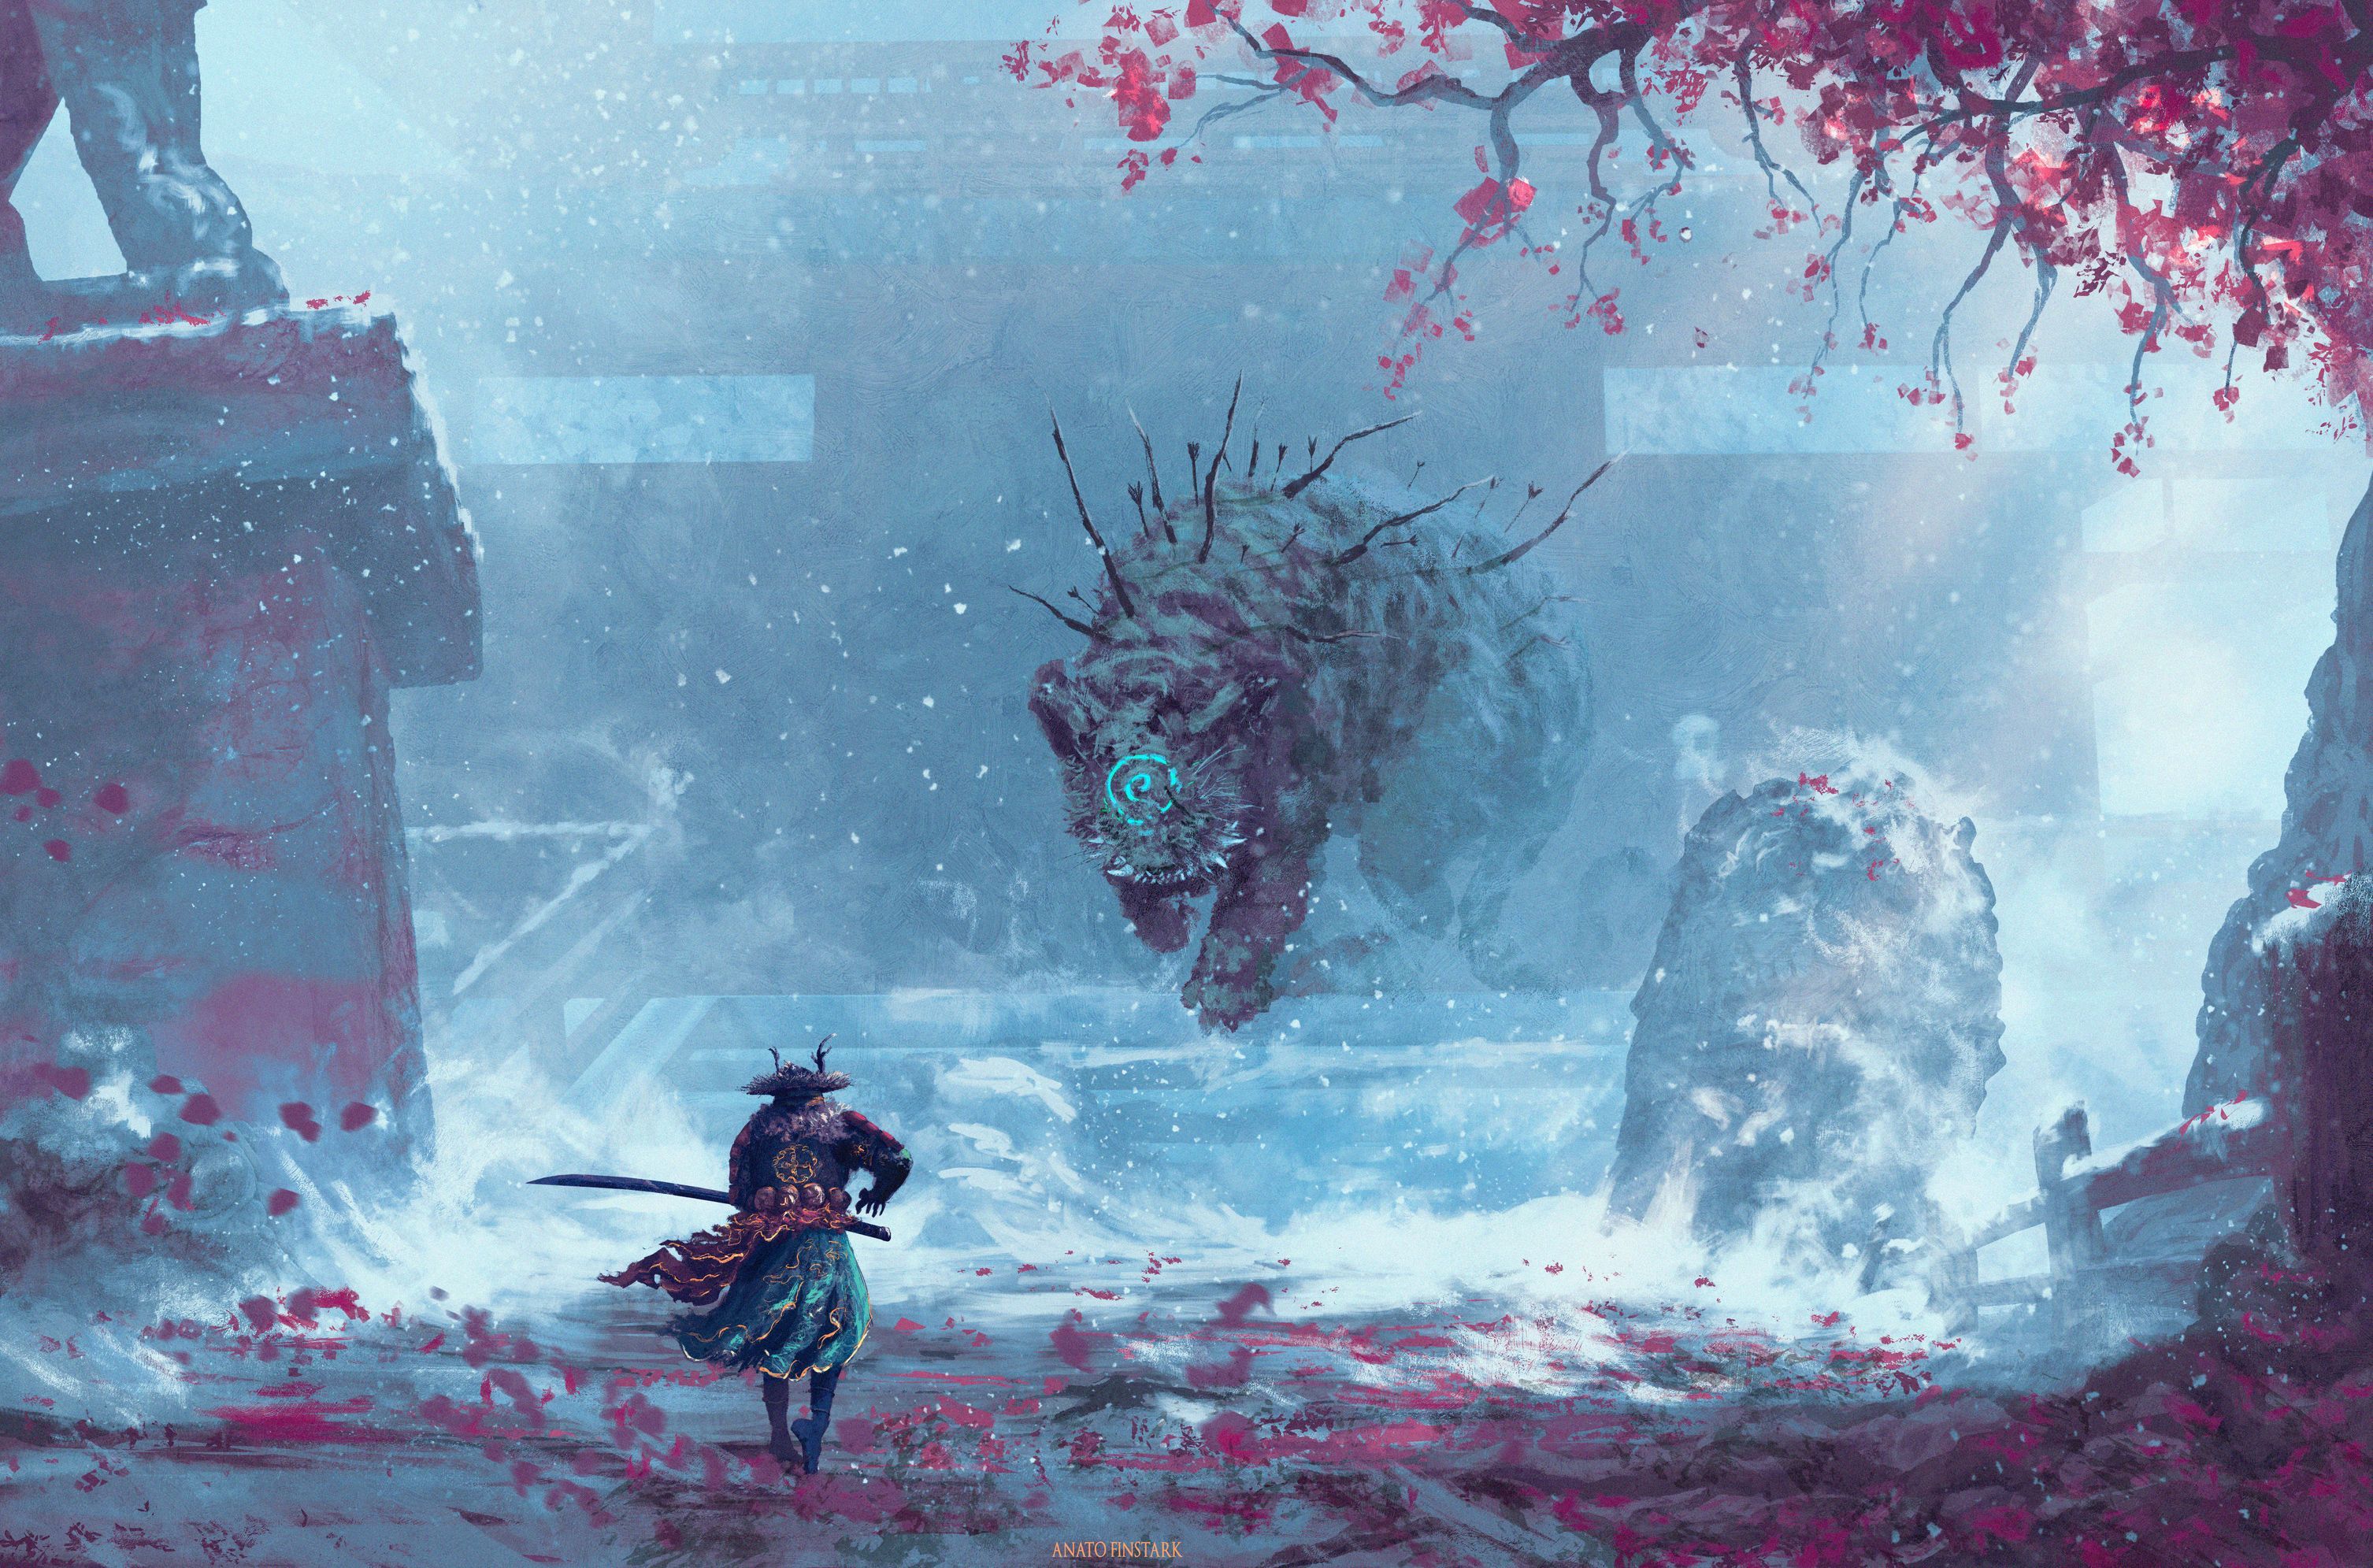 2560x1440 Artwork of a samurai facing a massive deer-like creature in a snowy, cherry blossom-filled forest - Samurai